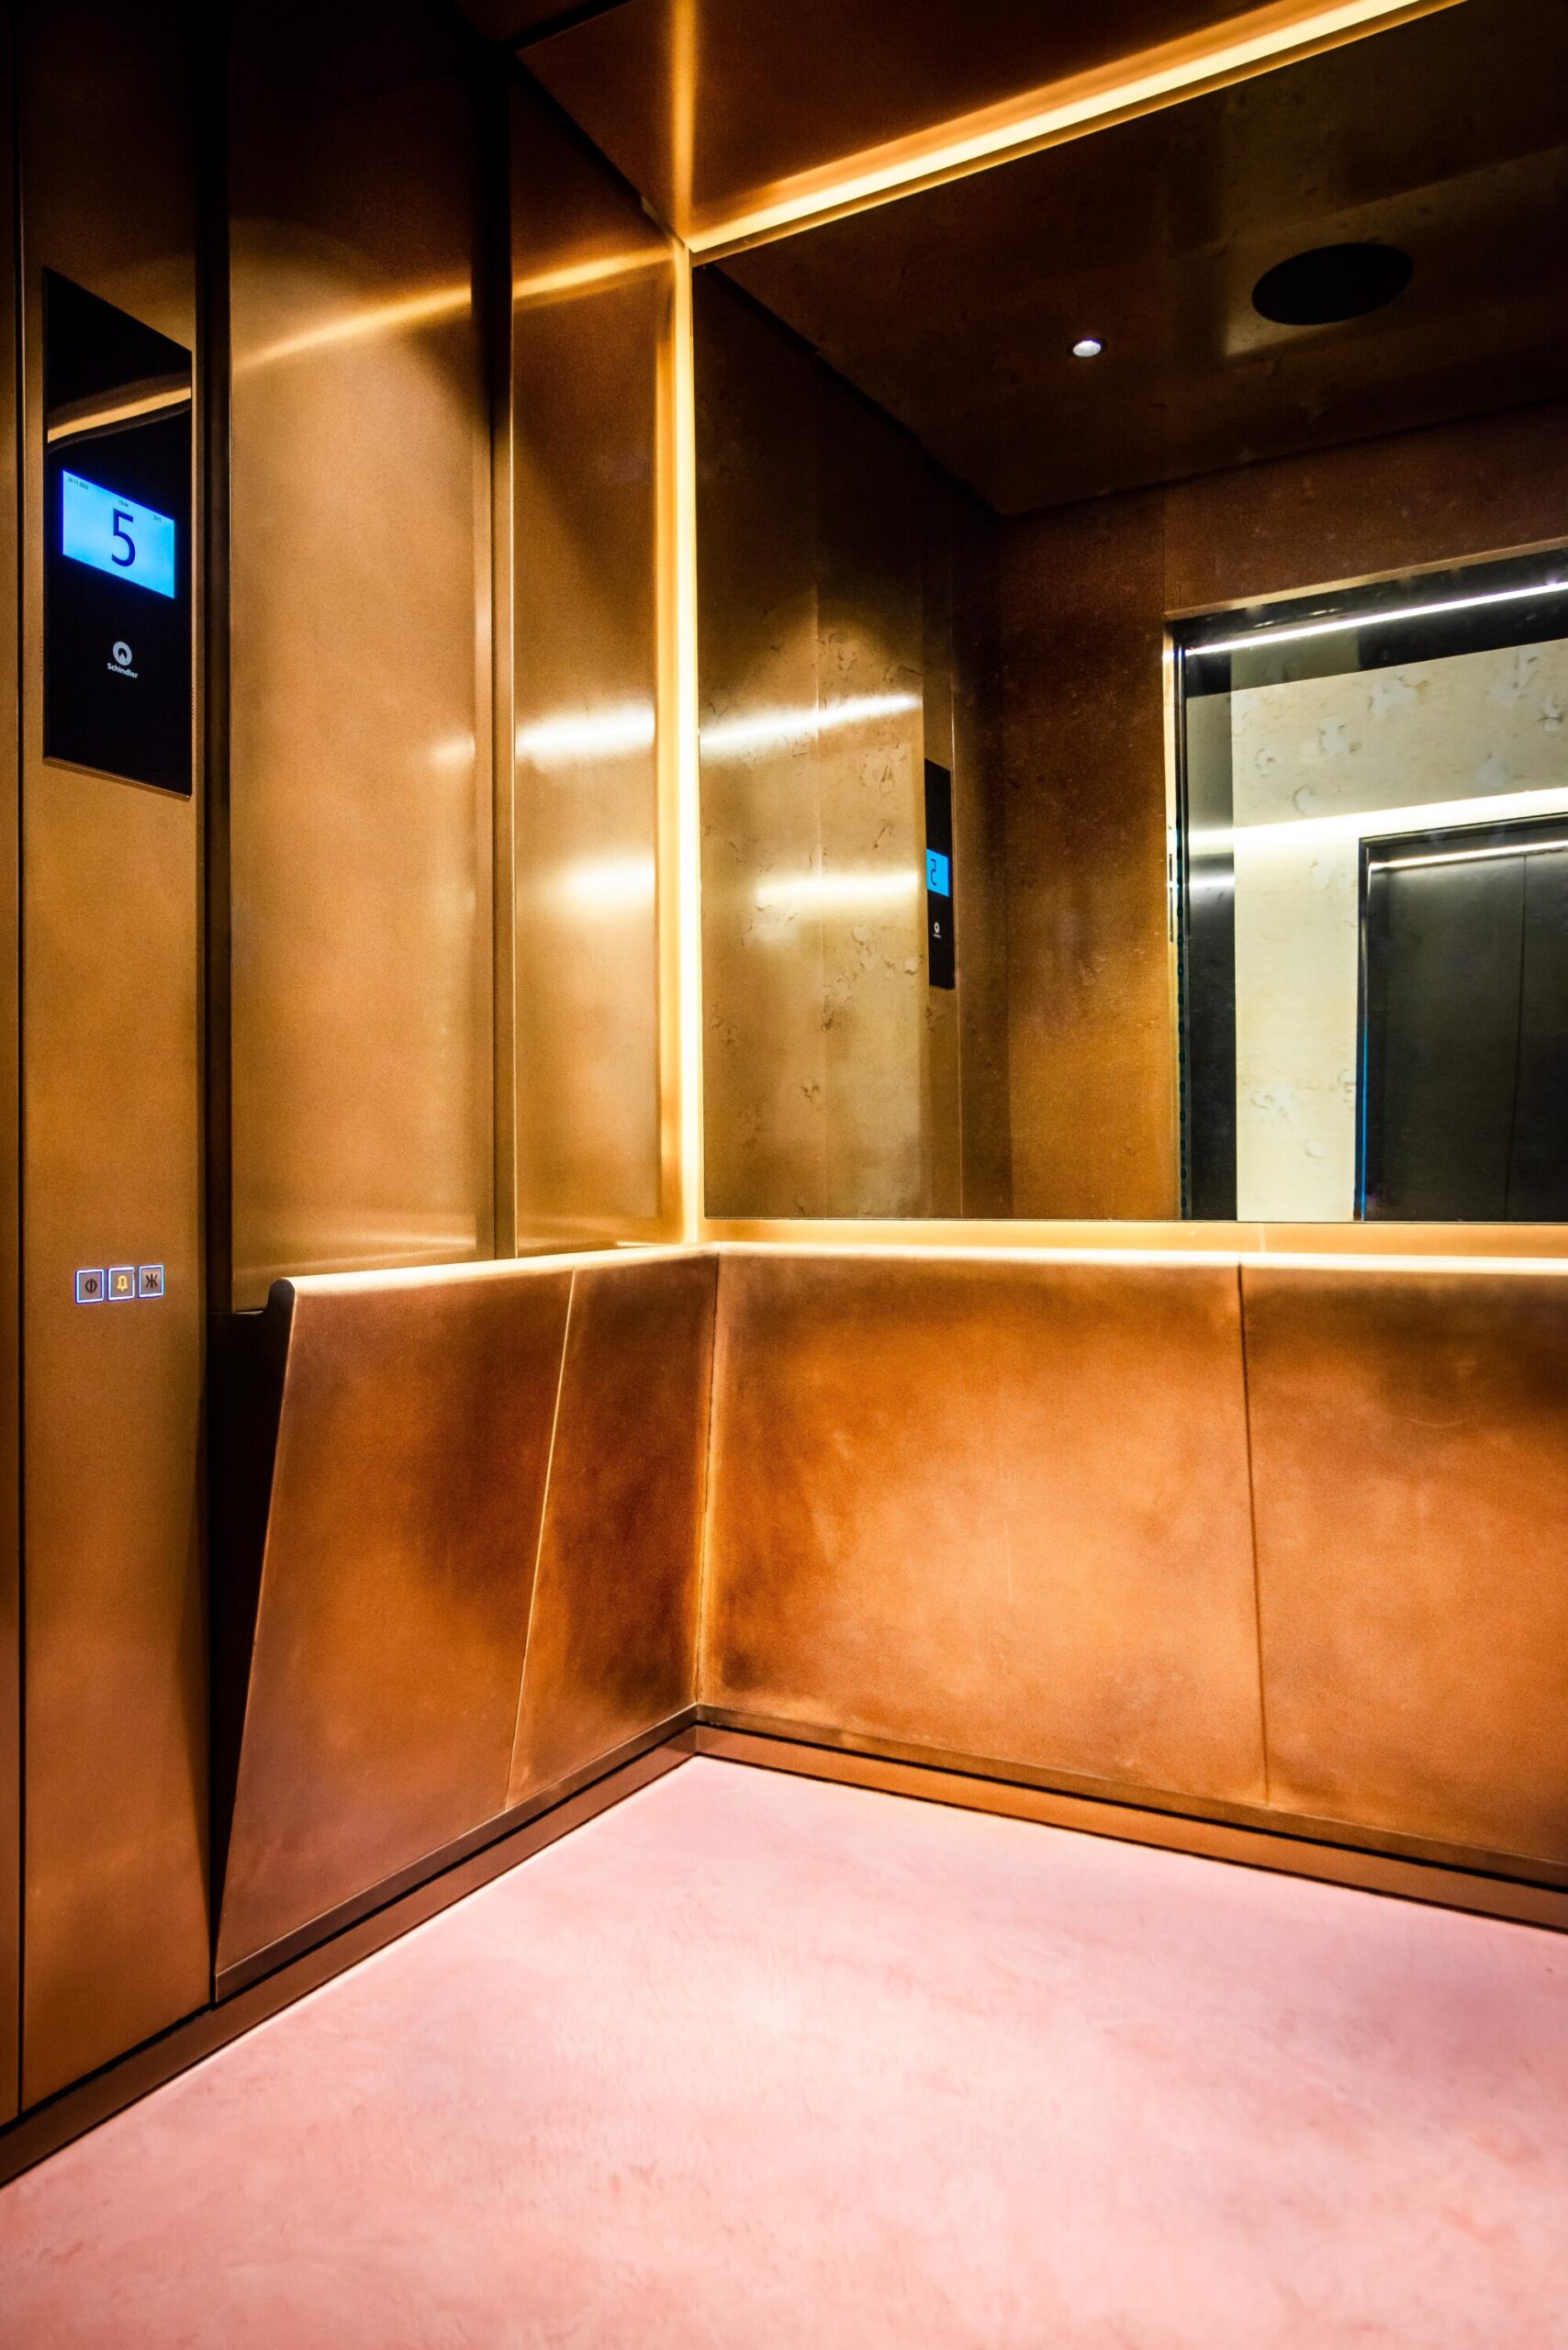 Elevator with a Bronze metal interior